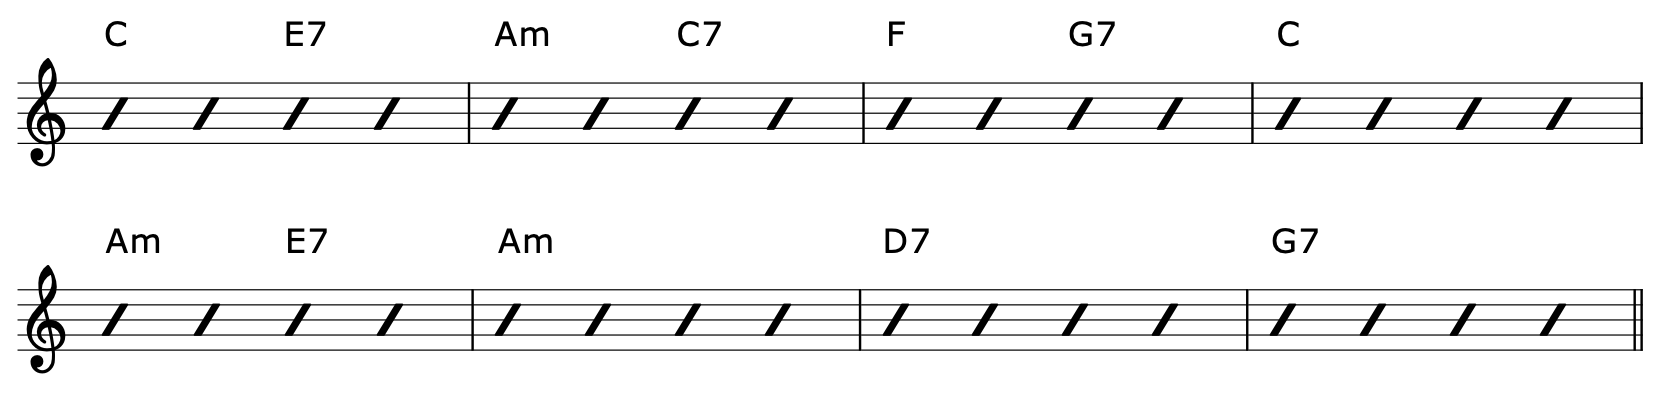 Secondary Dominant Chord Progression 6